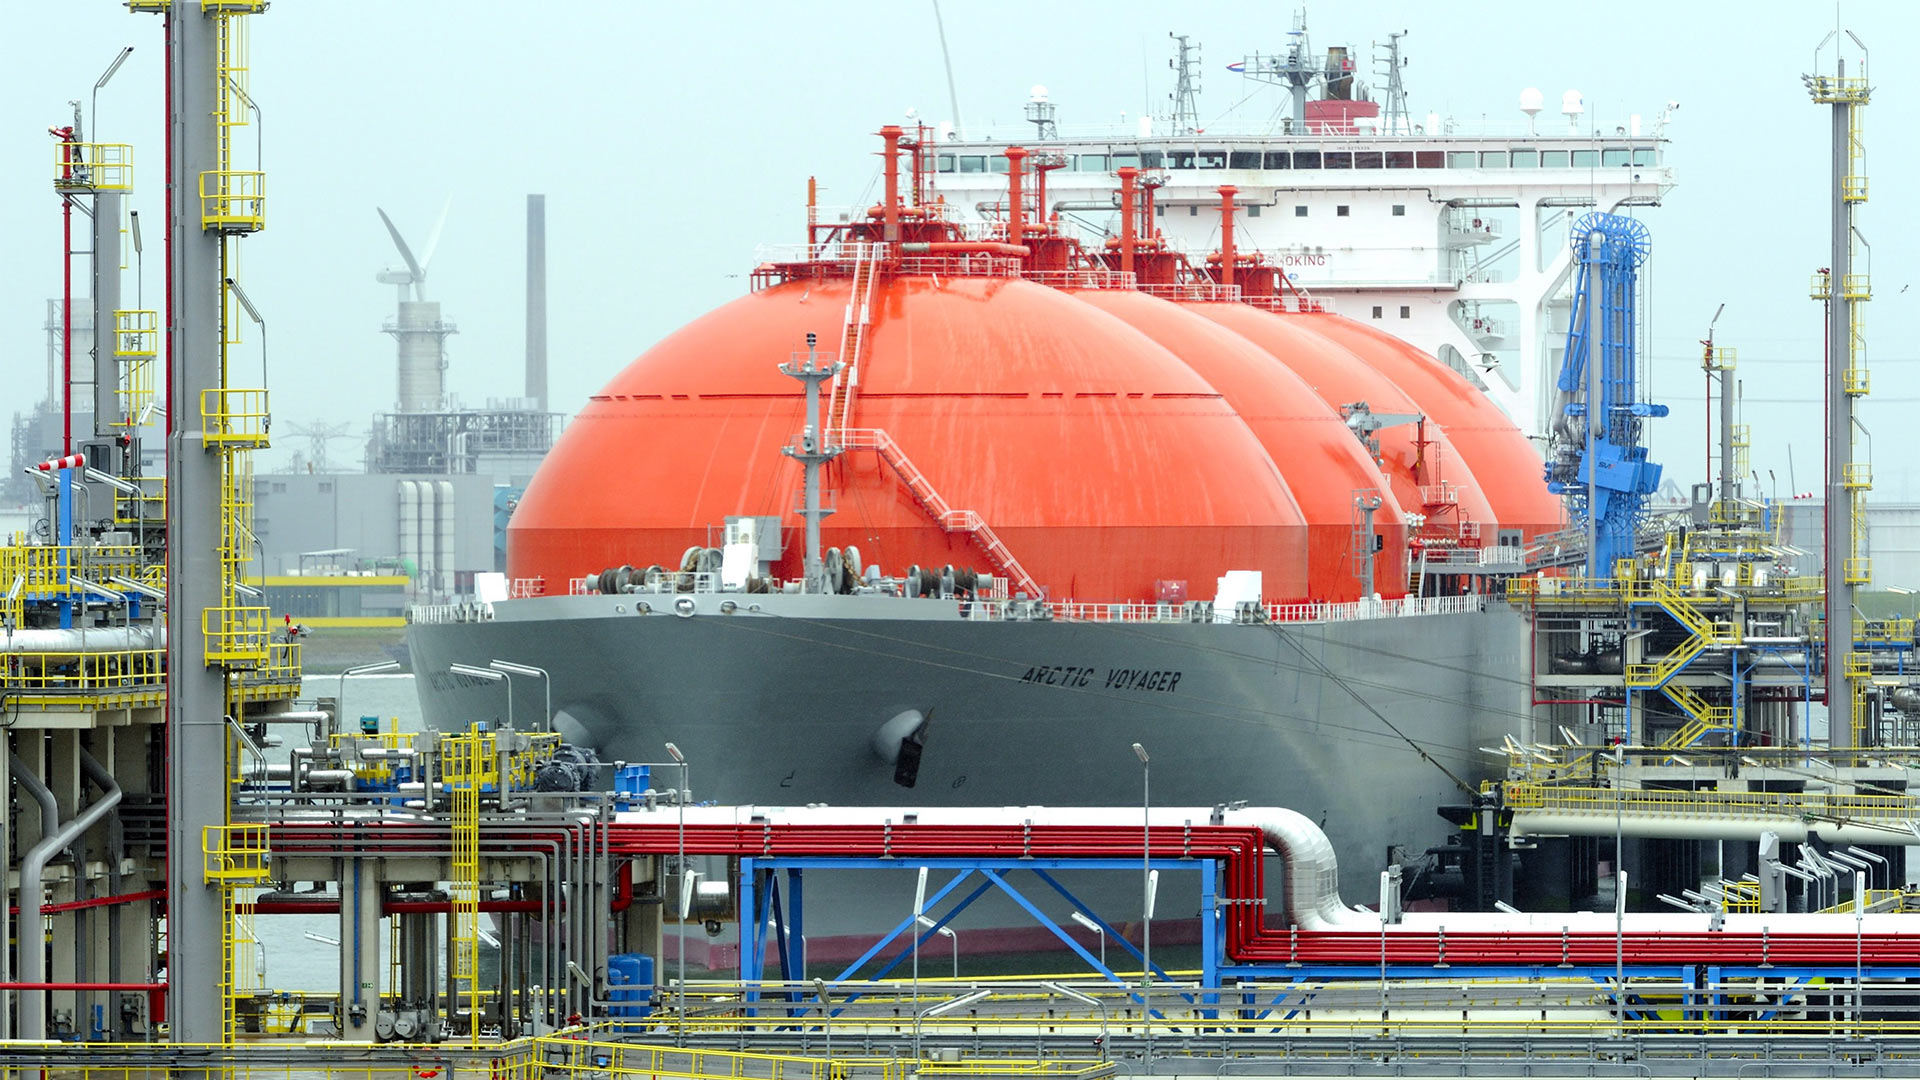 Tankschiff "Artic Voyager" am LNG Terminal Rotterdam | picture alliance / dpa